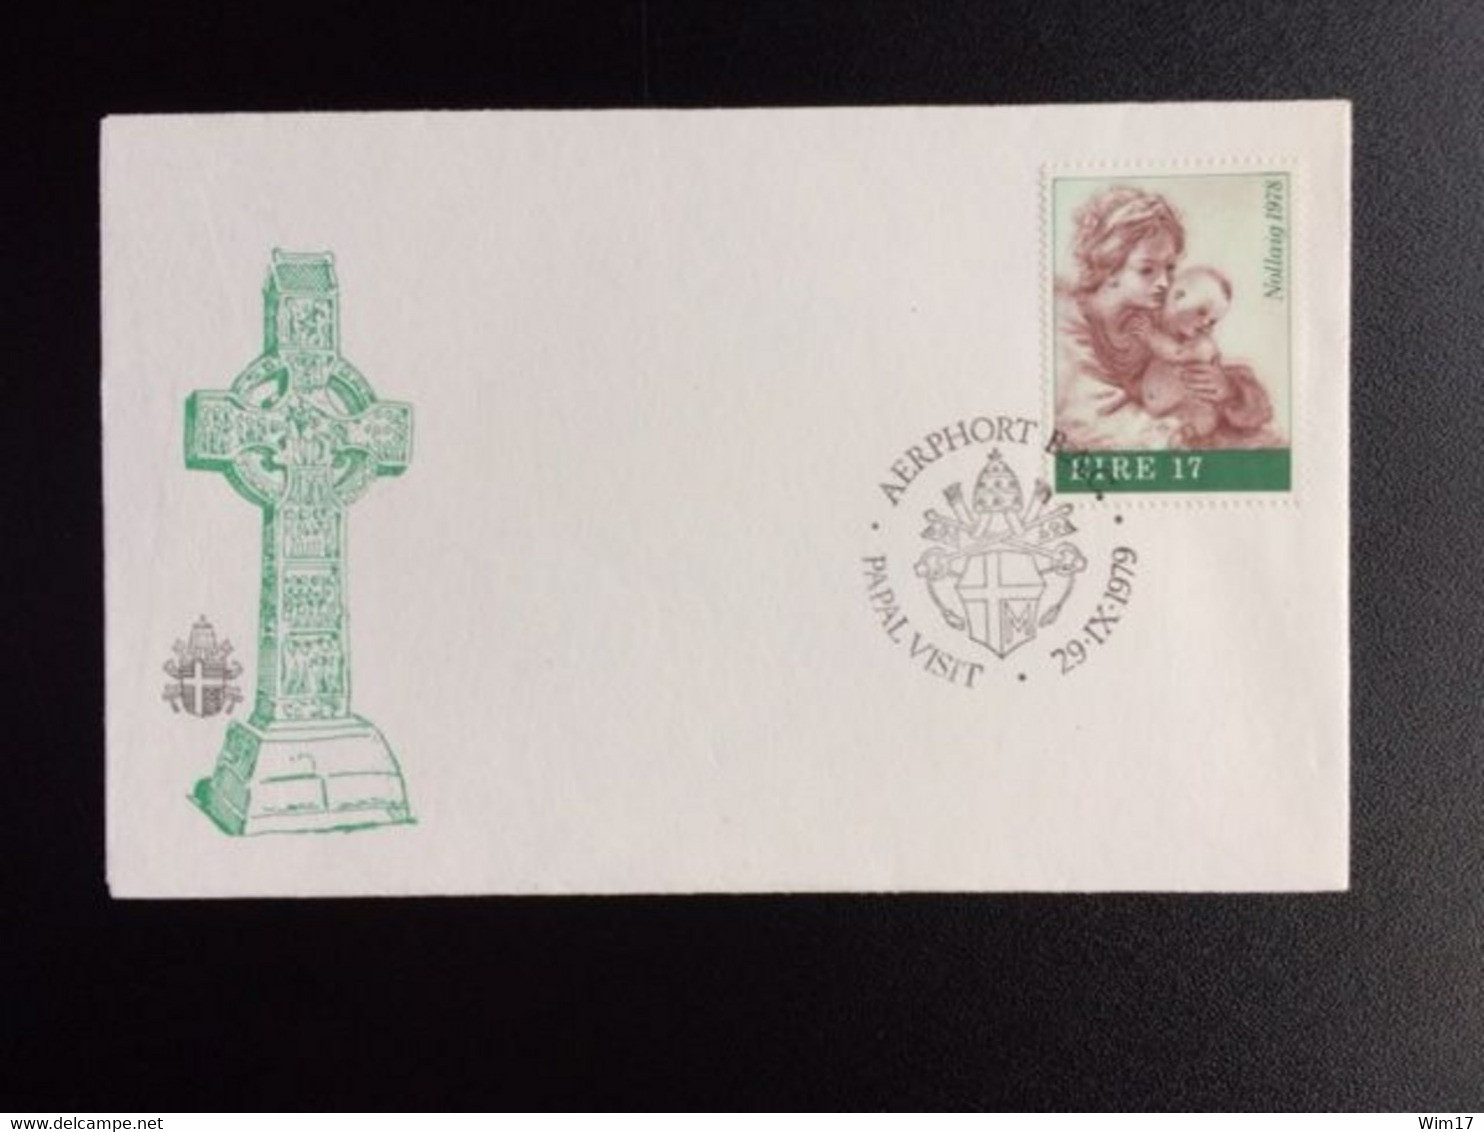 IRELAND 1979 FDC PAPAL VISIT TO IRELAND IERLAND - Postal Stationery